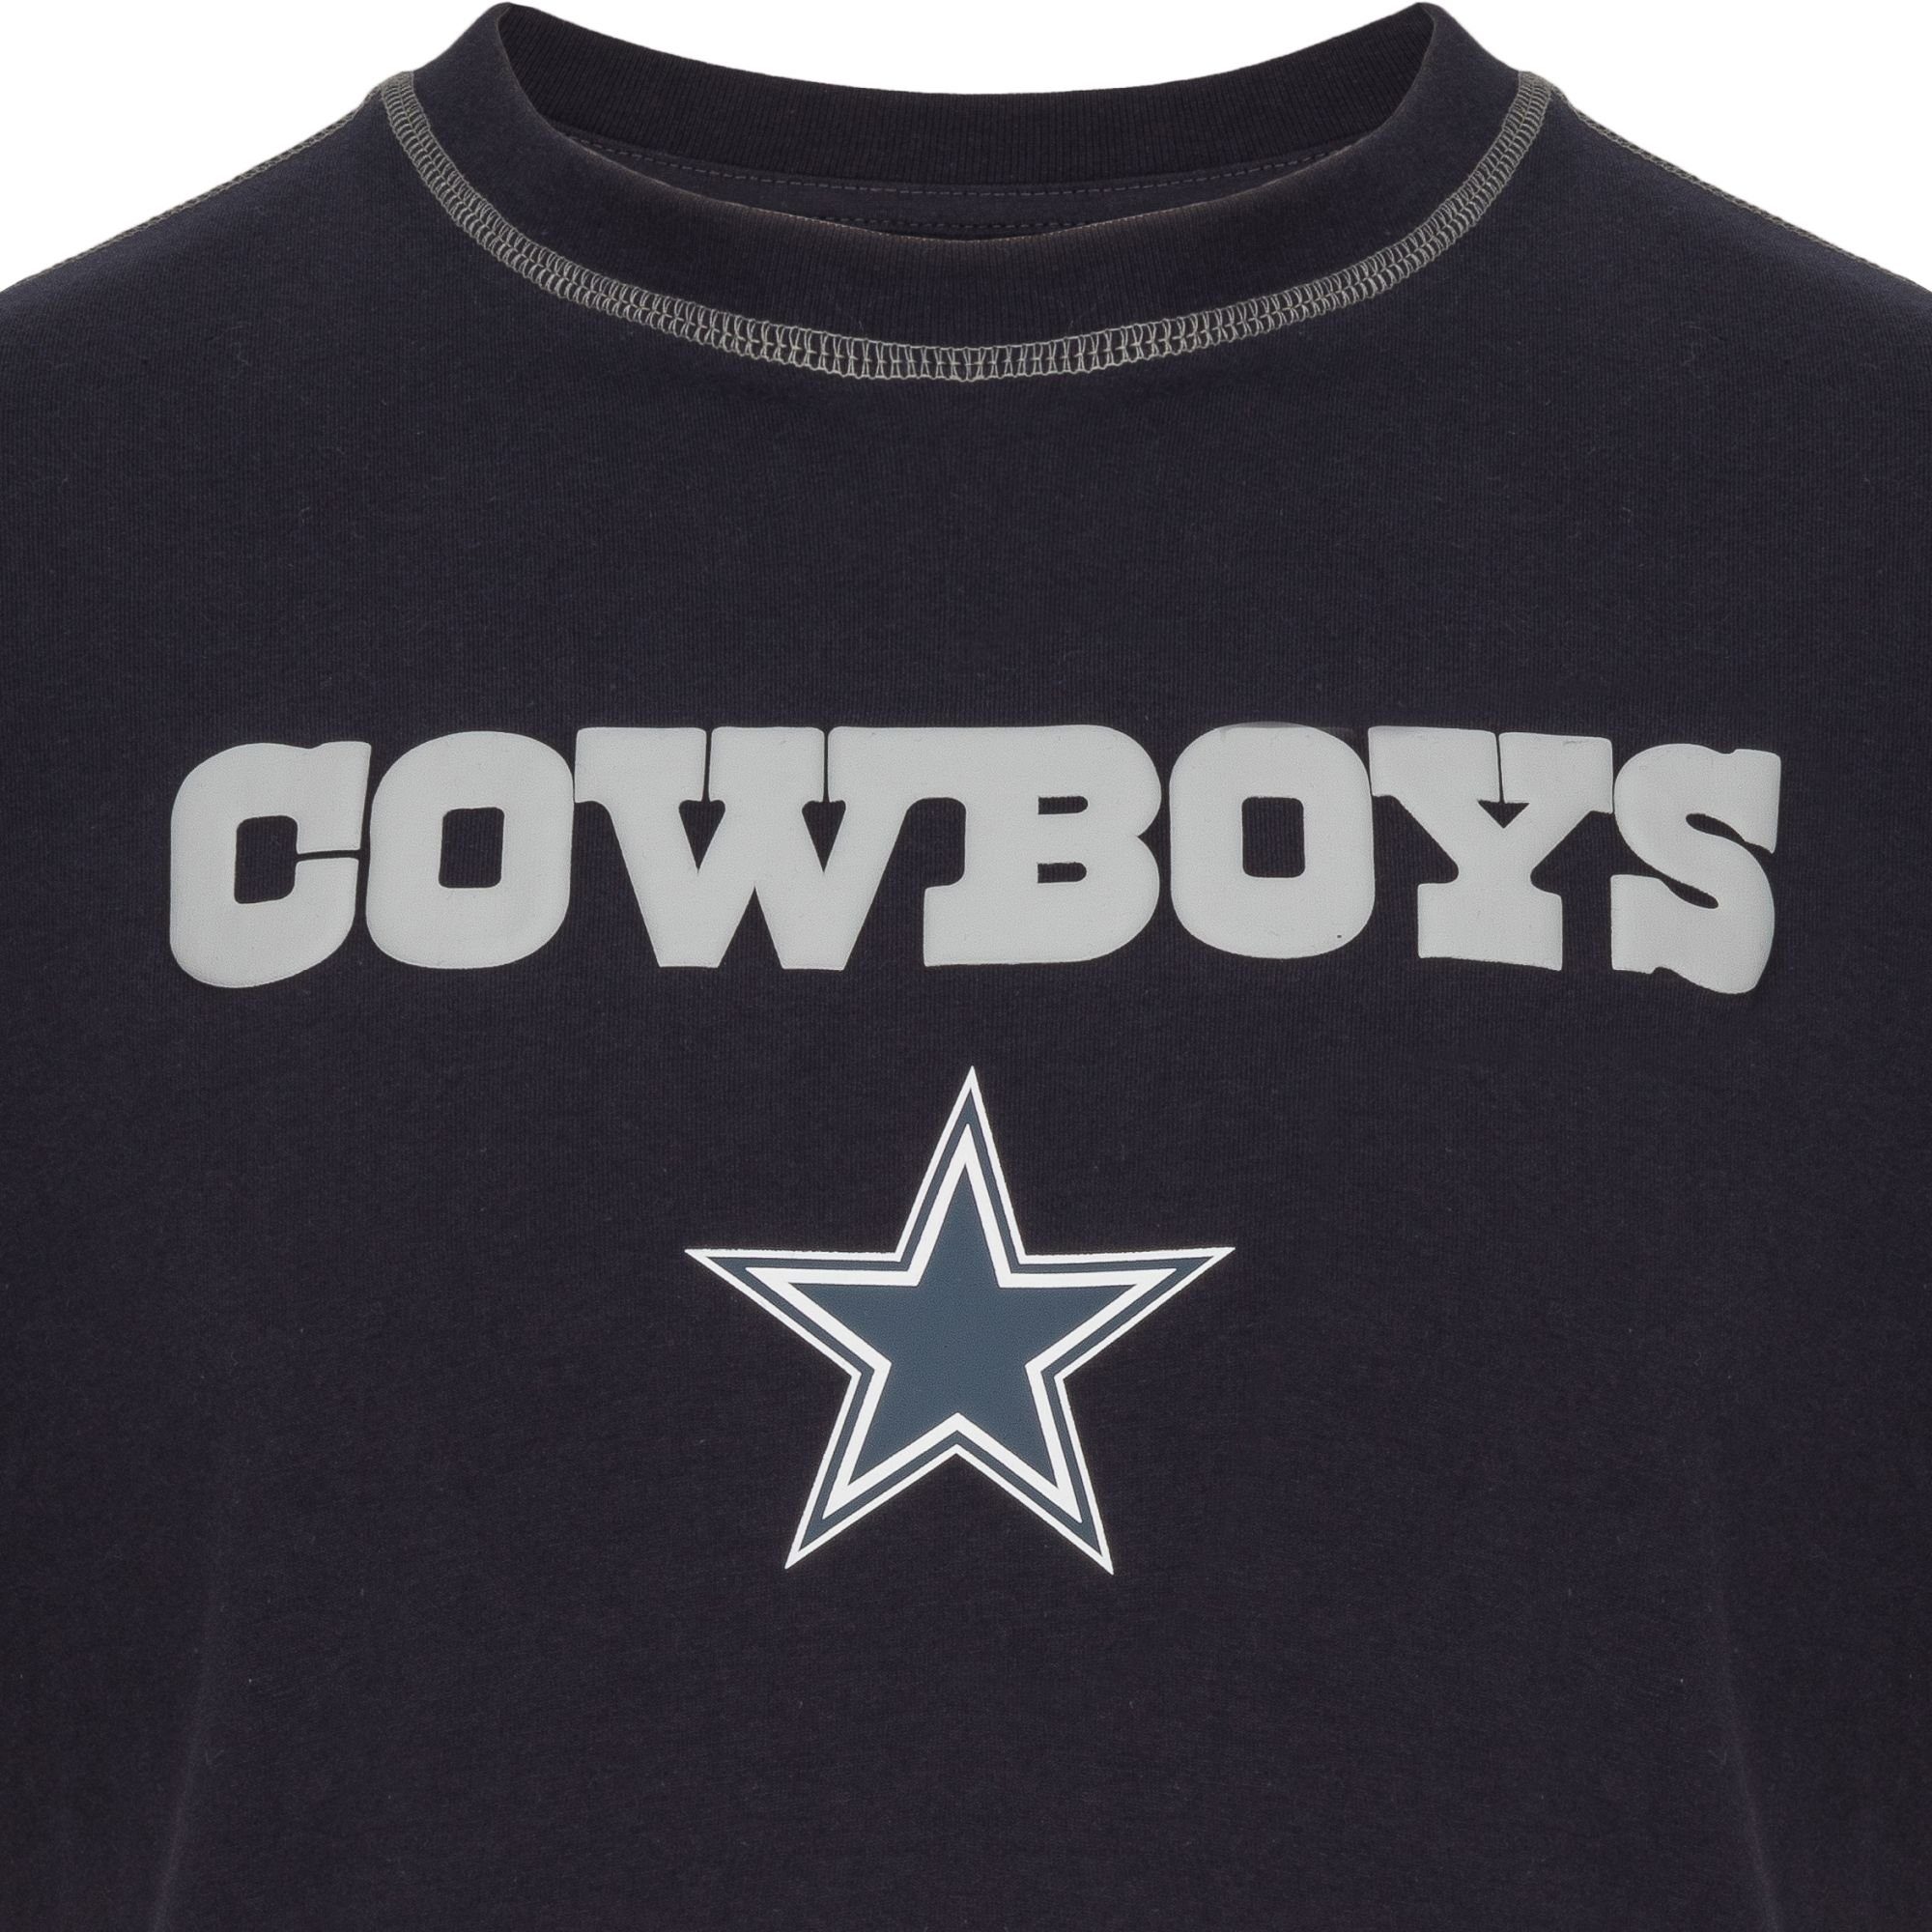 SIDELINE Era New Print-Shirt Dallas Cowboys NFL